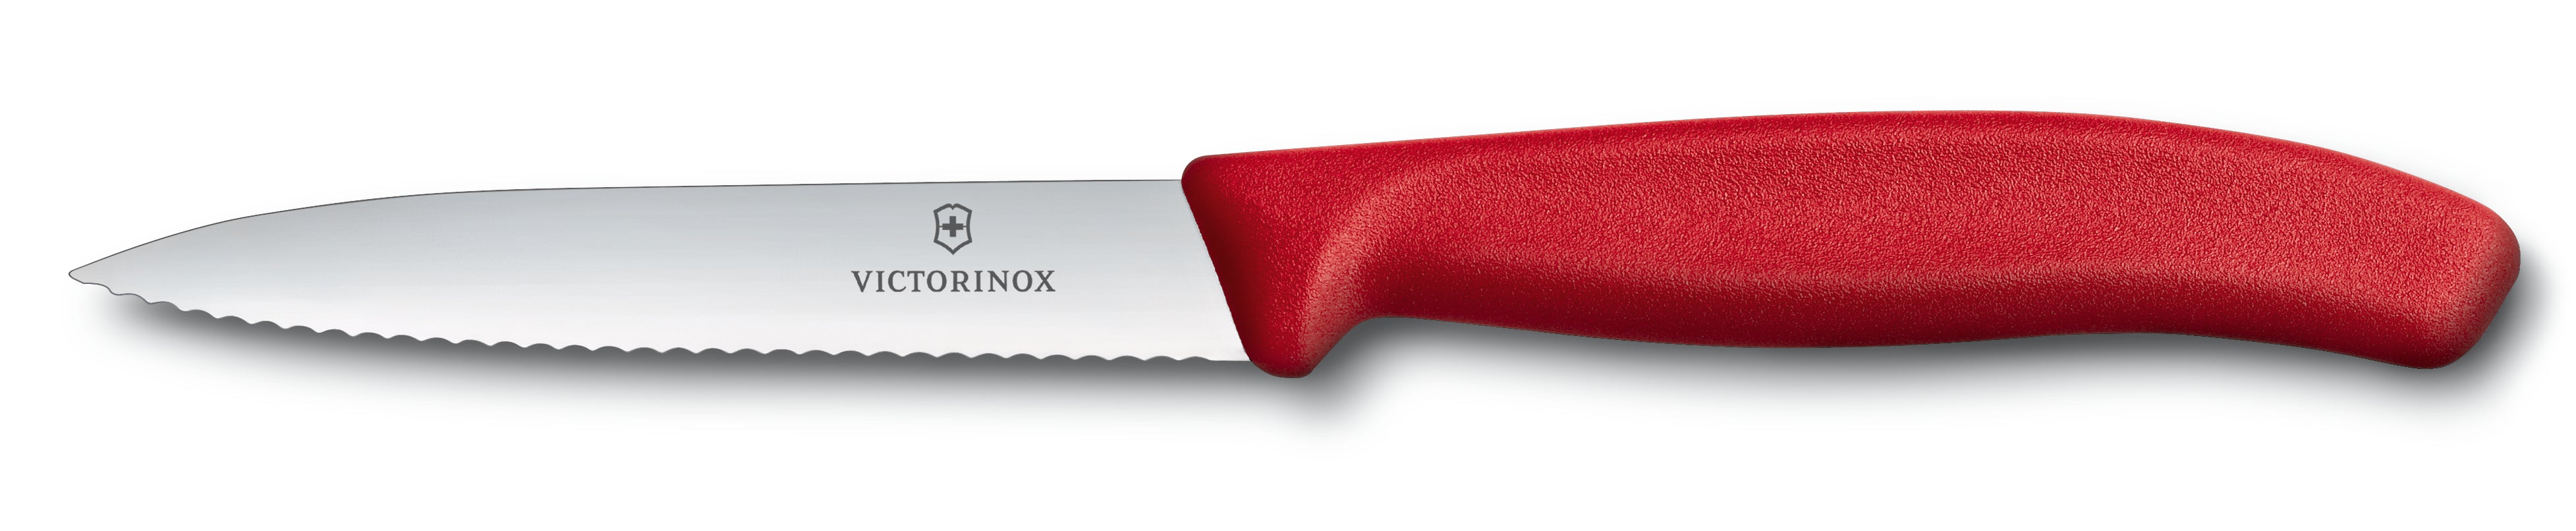 Victorinox Classic Paring Knife Wavy Edge 10cm - Red